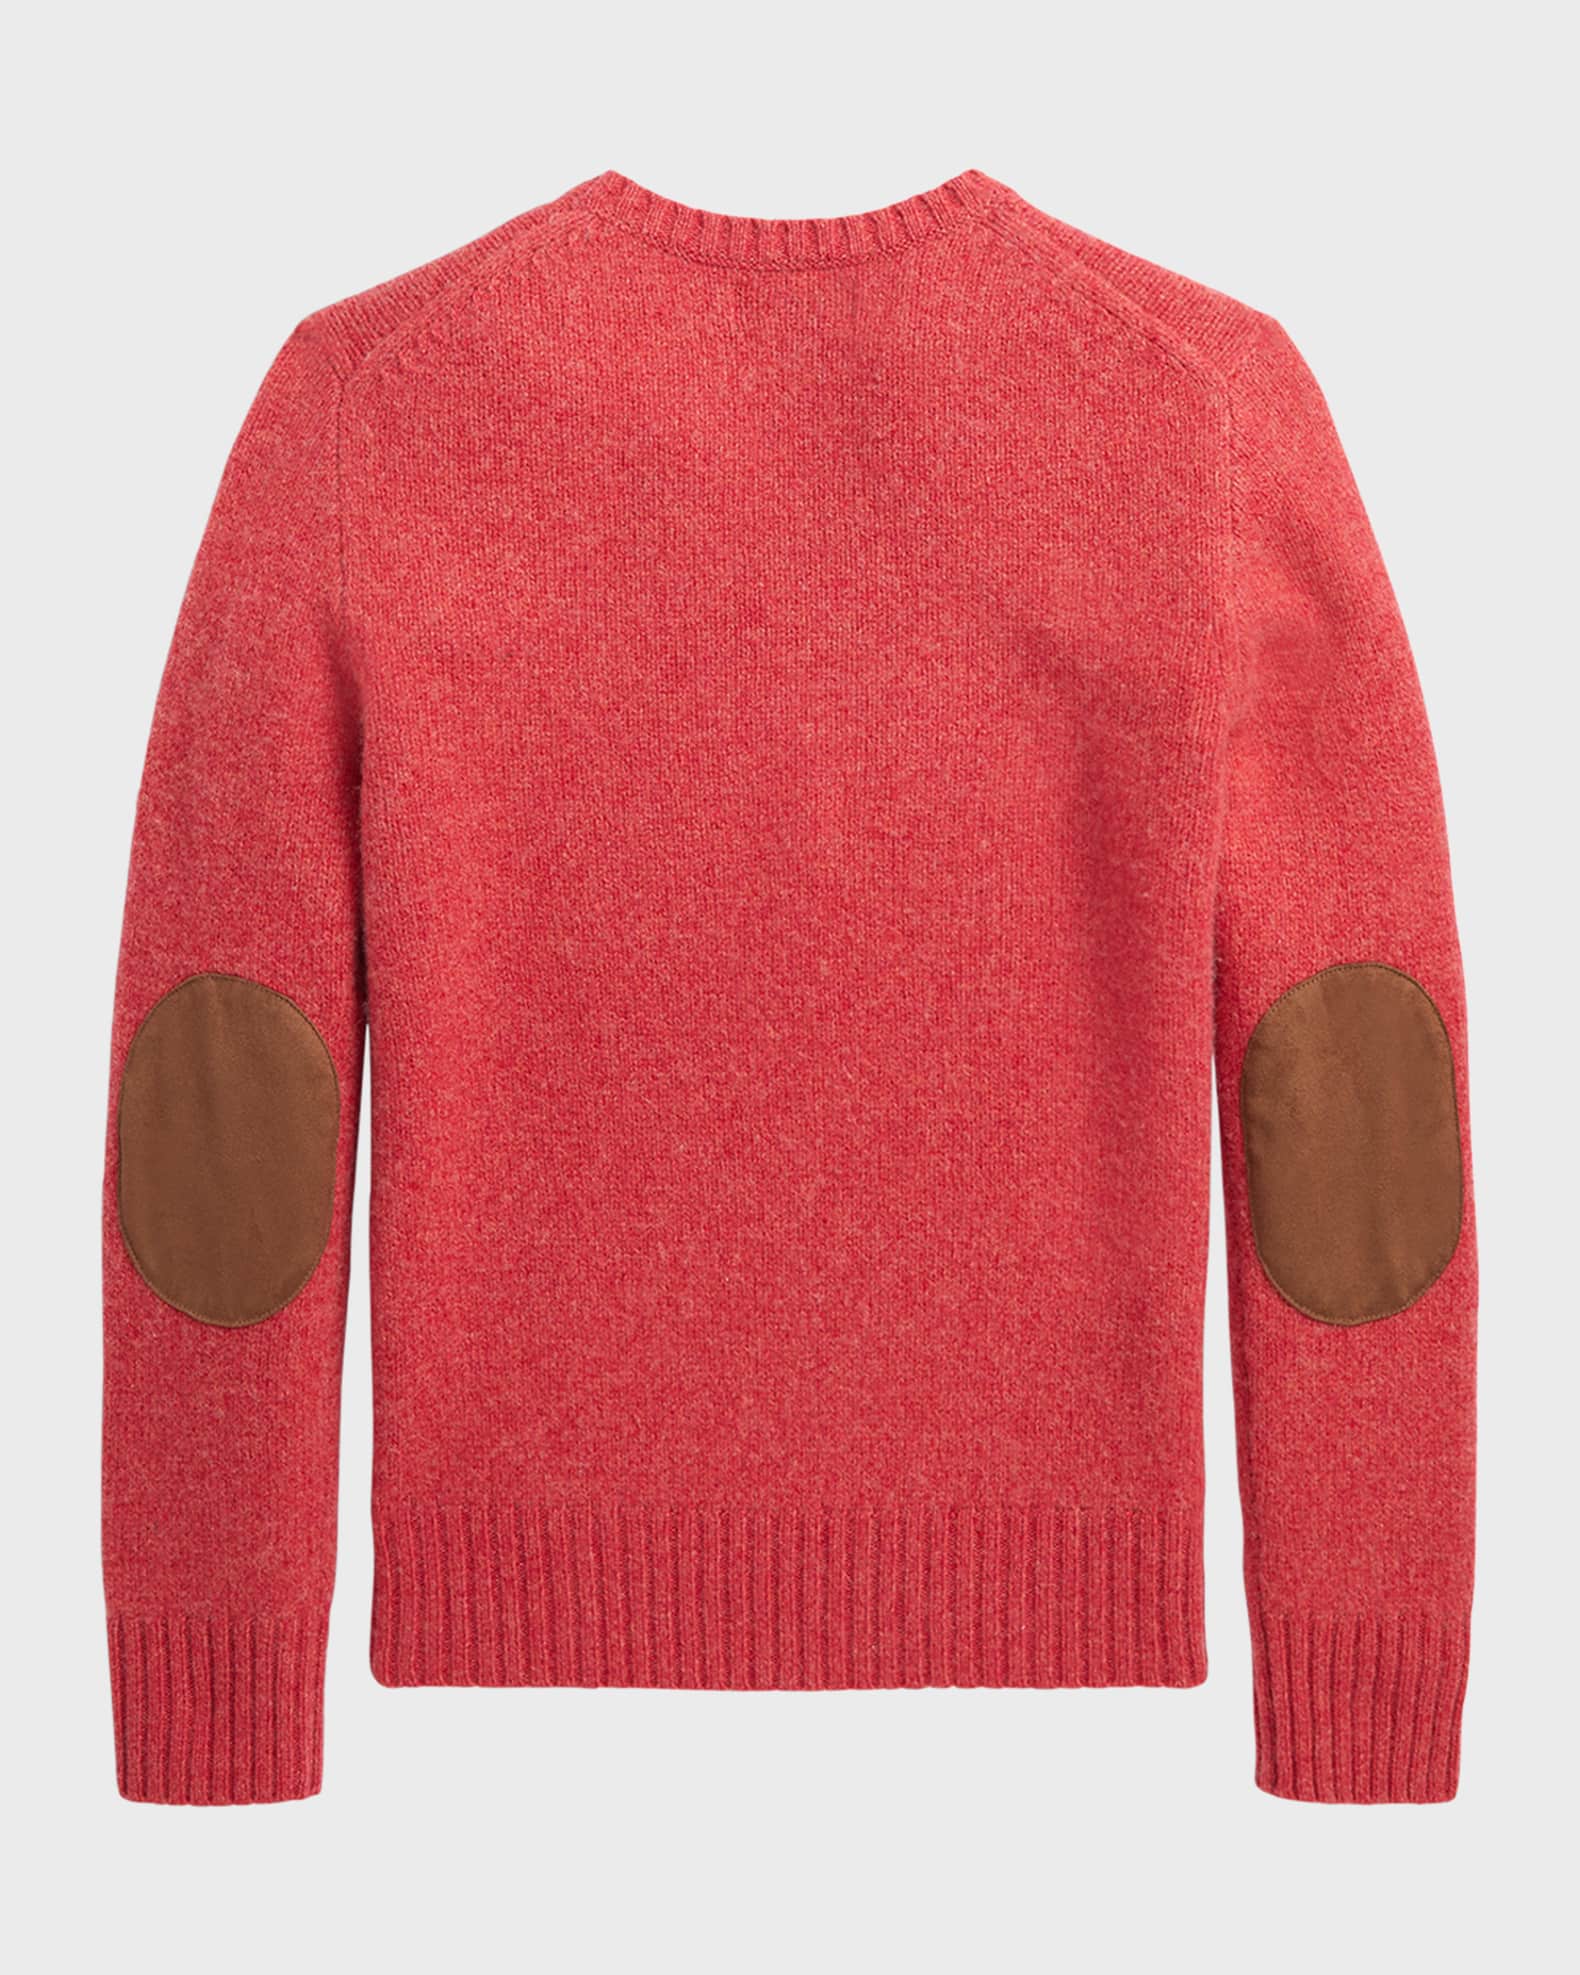 New Louis Vuitton Wool Silk Leather Elbows Men Sweater Size S (Medium)